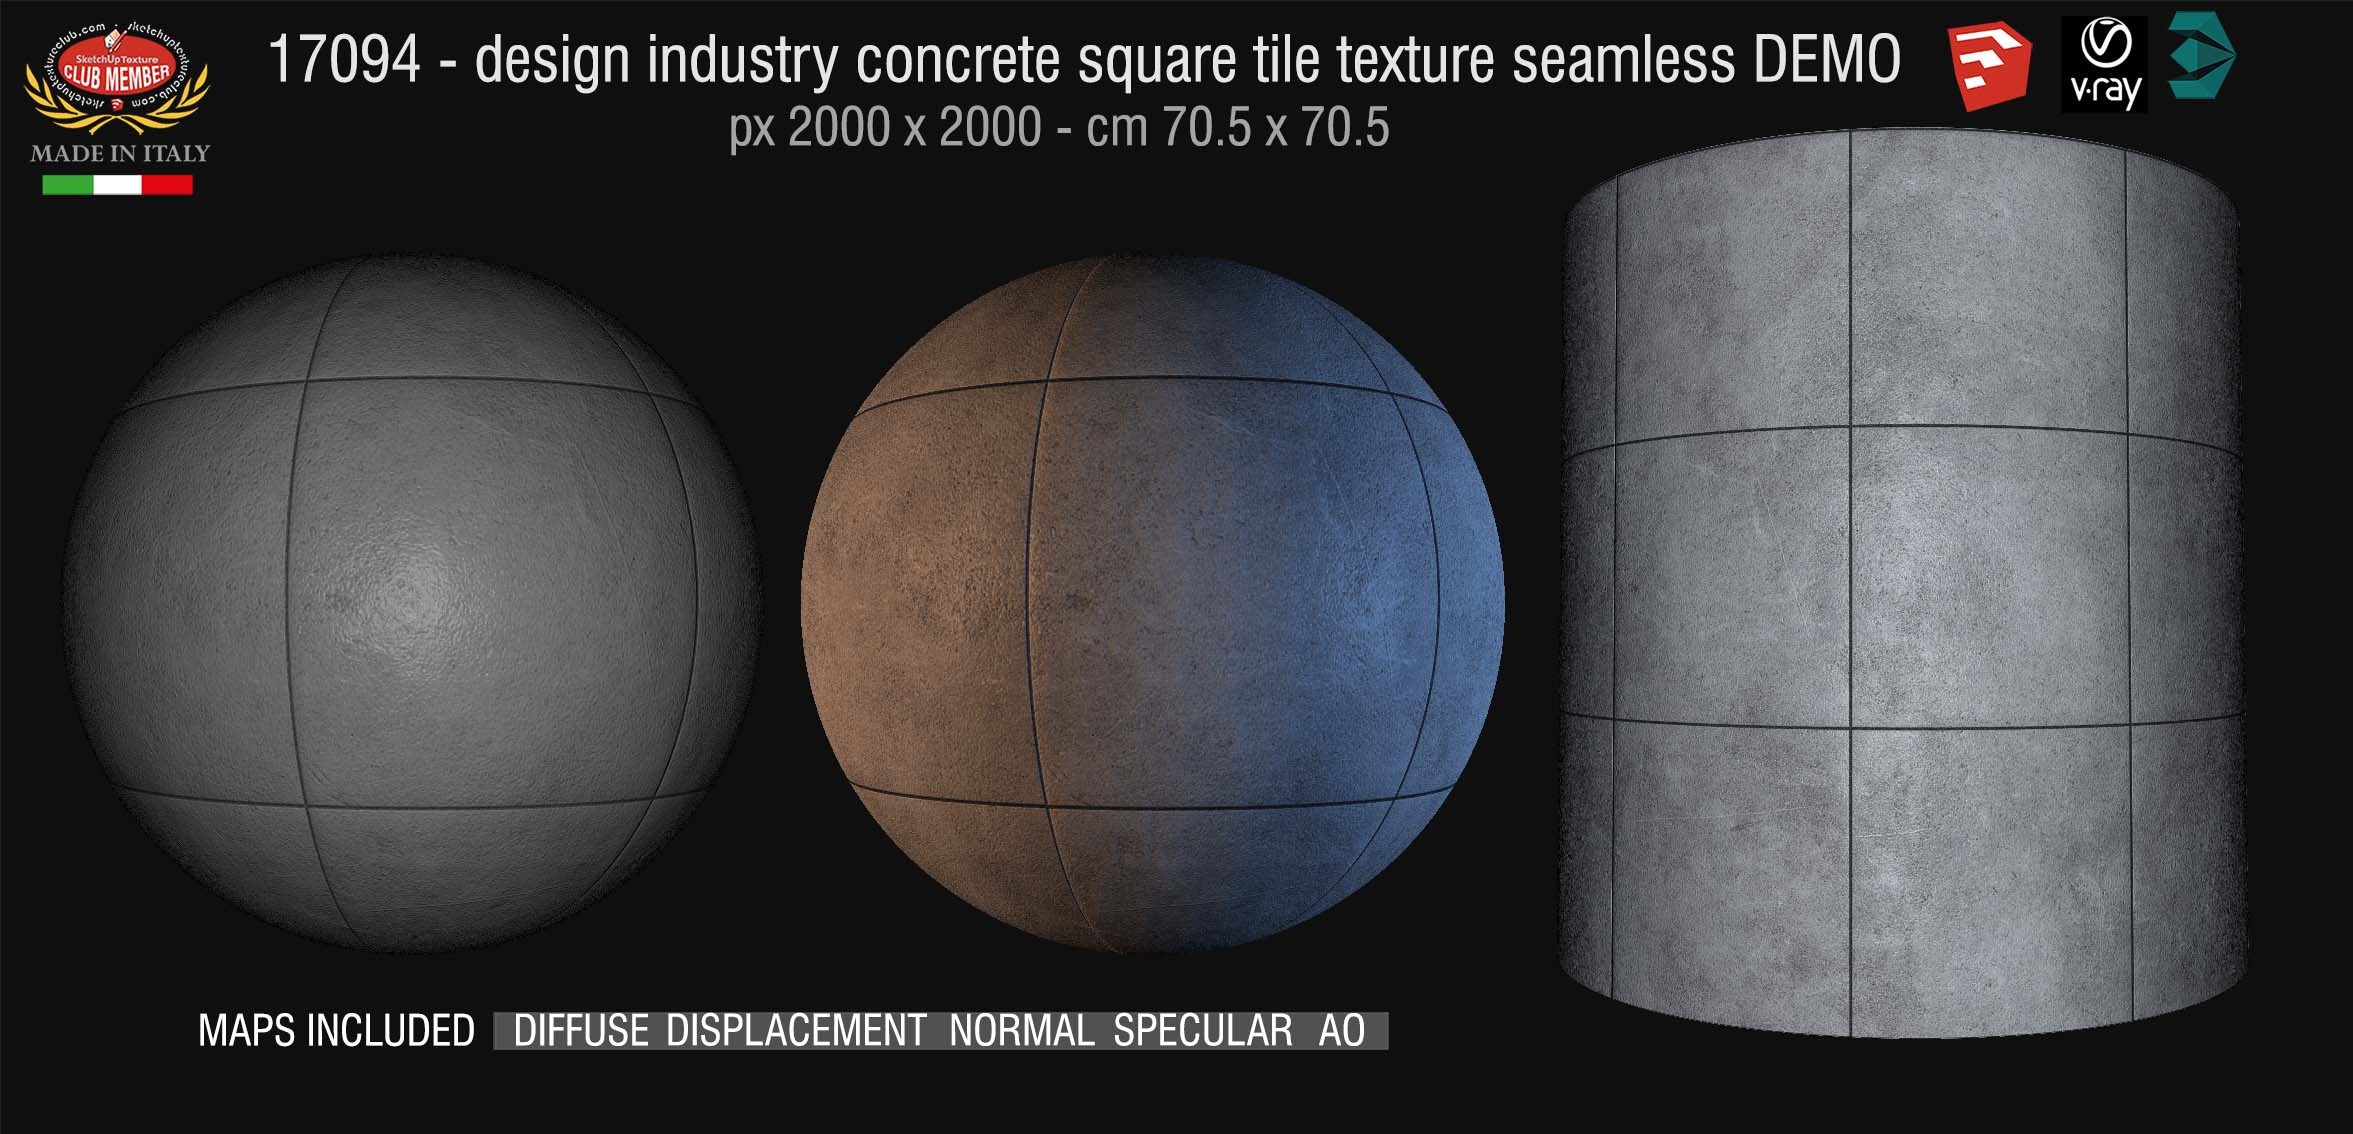 17094 HR Design industry concrete square tile texture seamless + maps DEMO